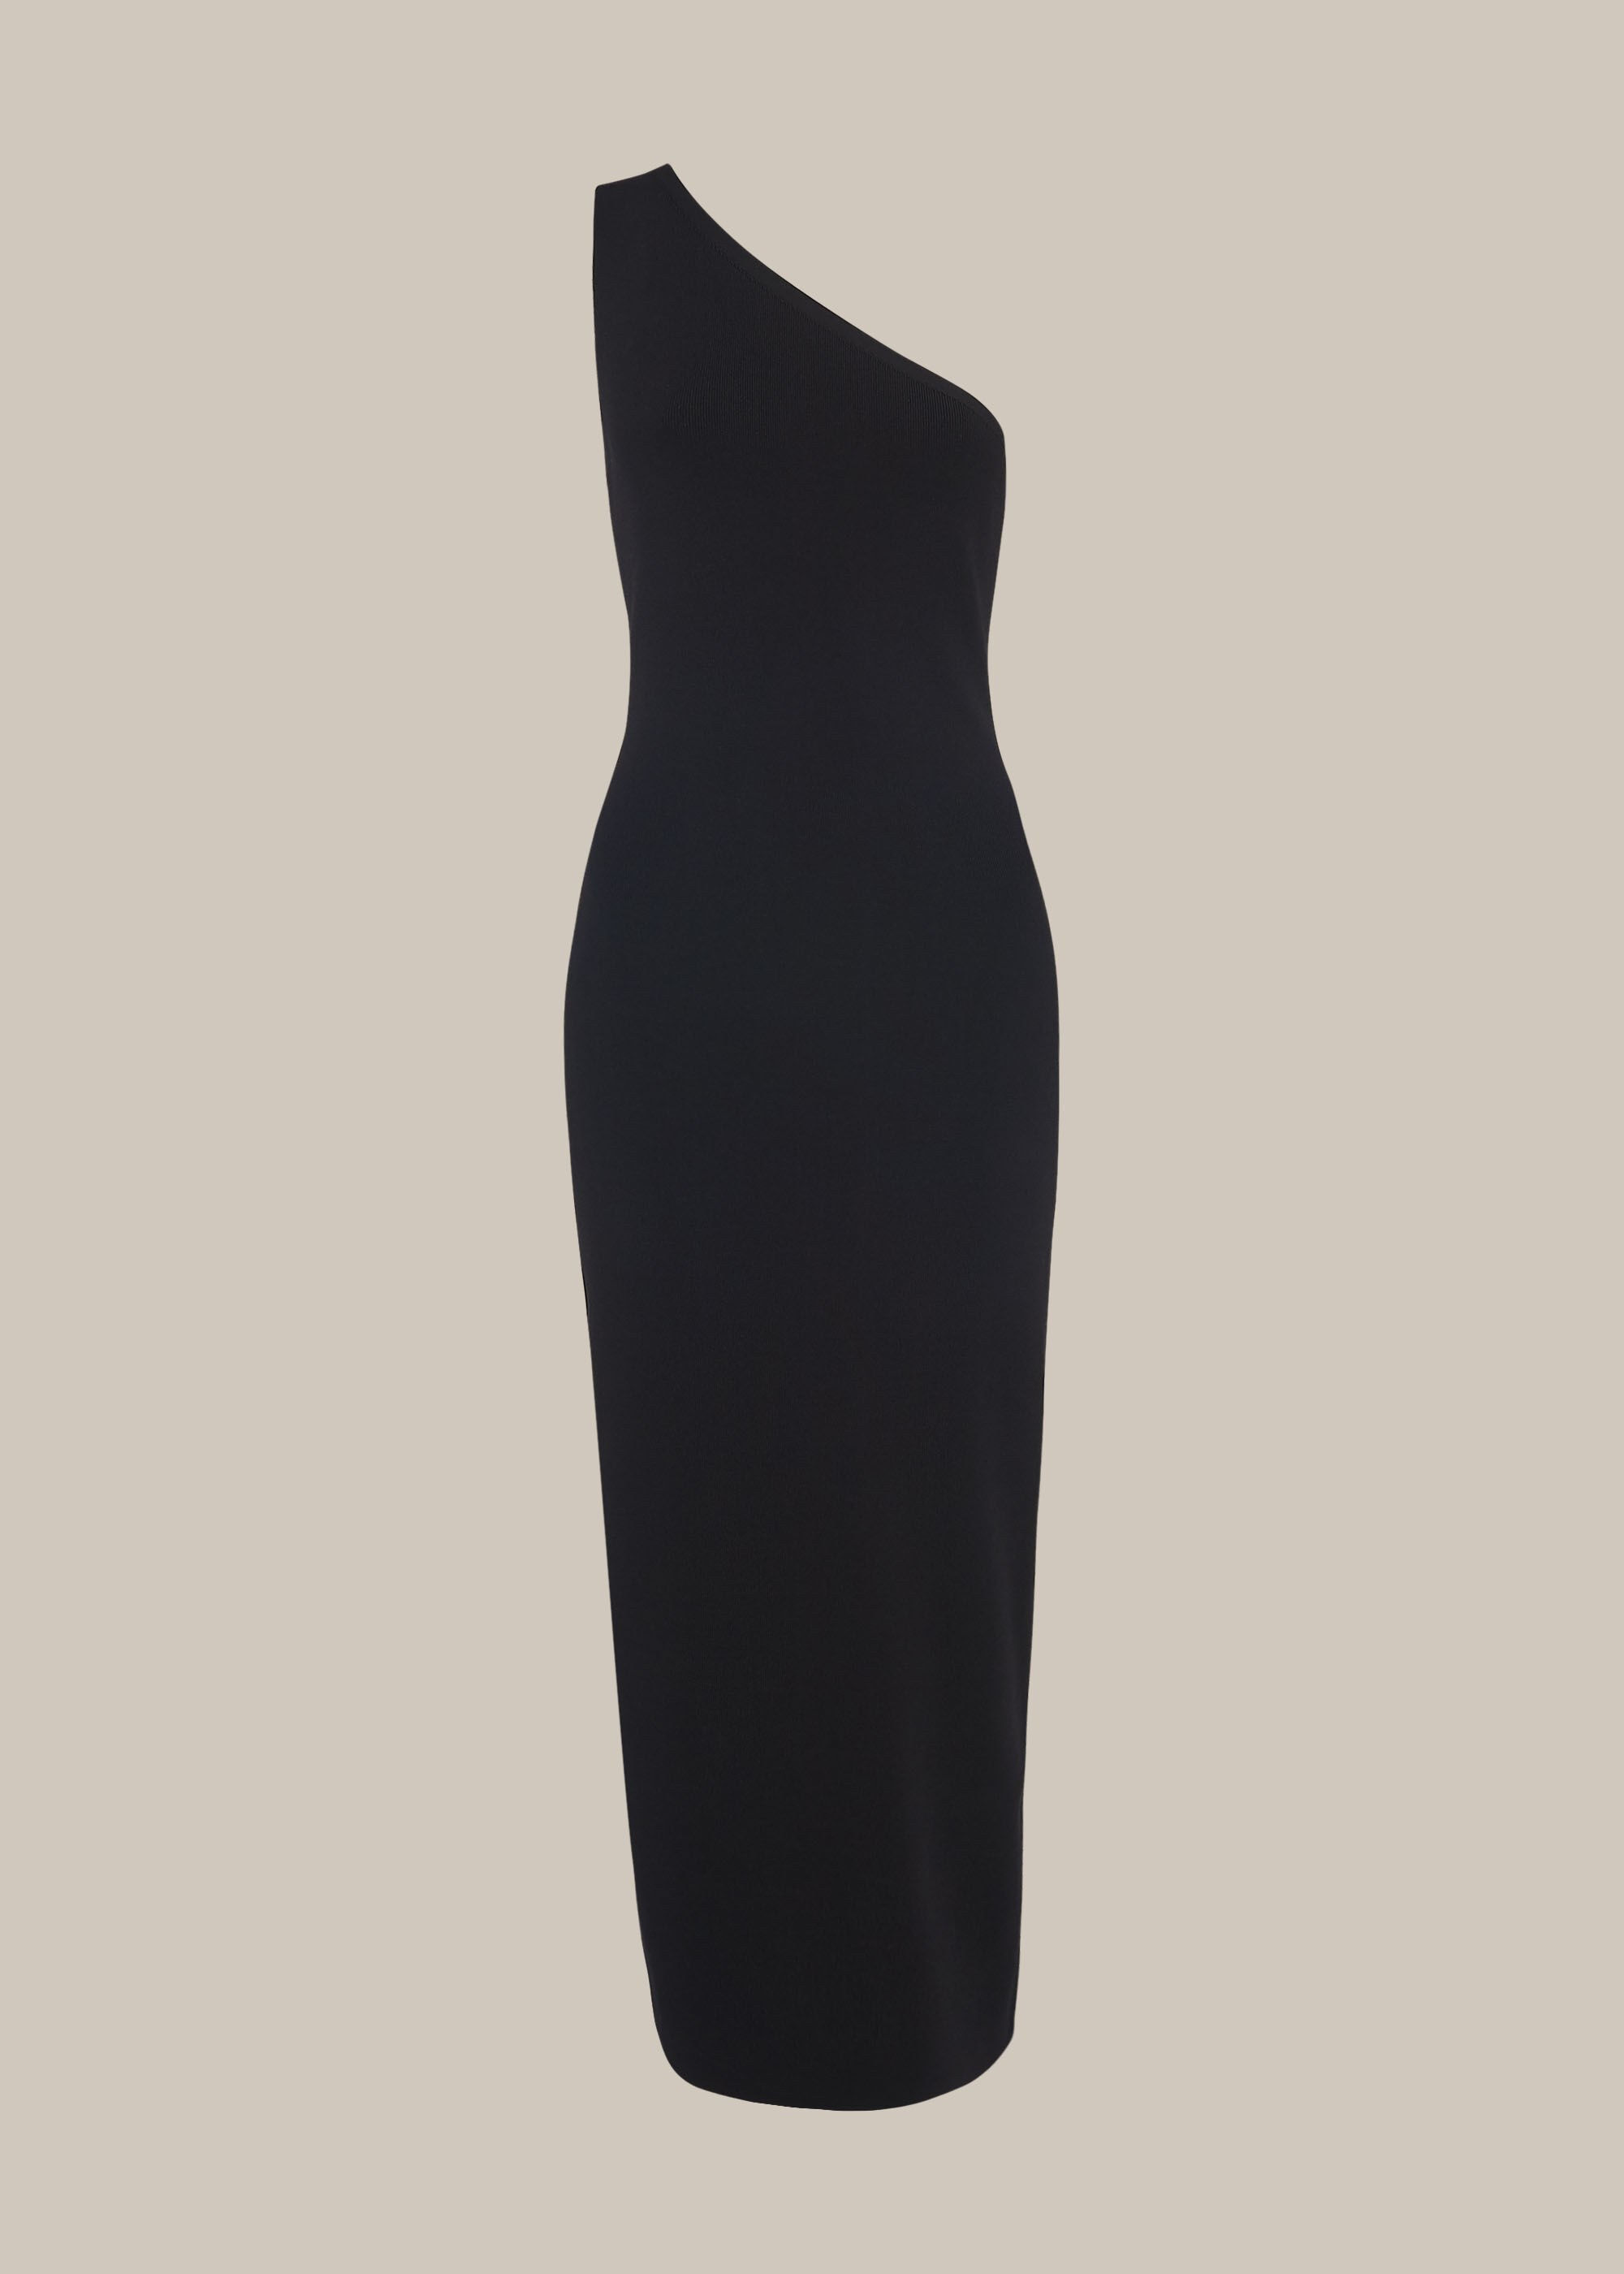 Black One Shoulder Dress Midi